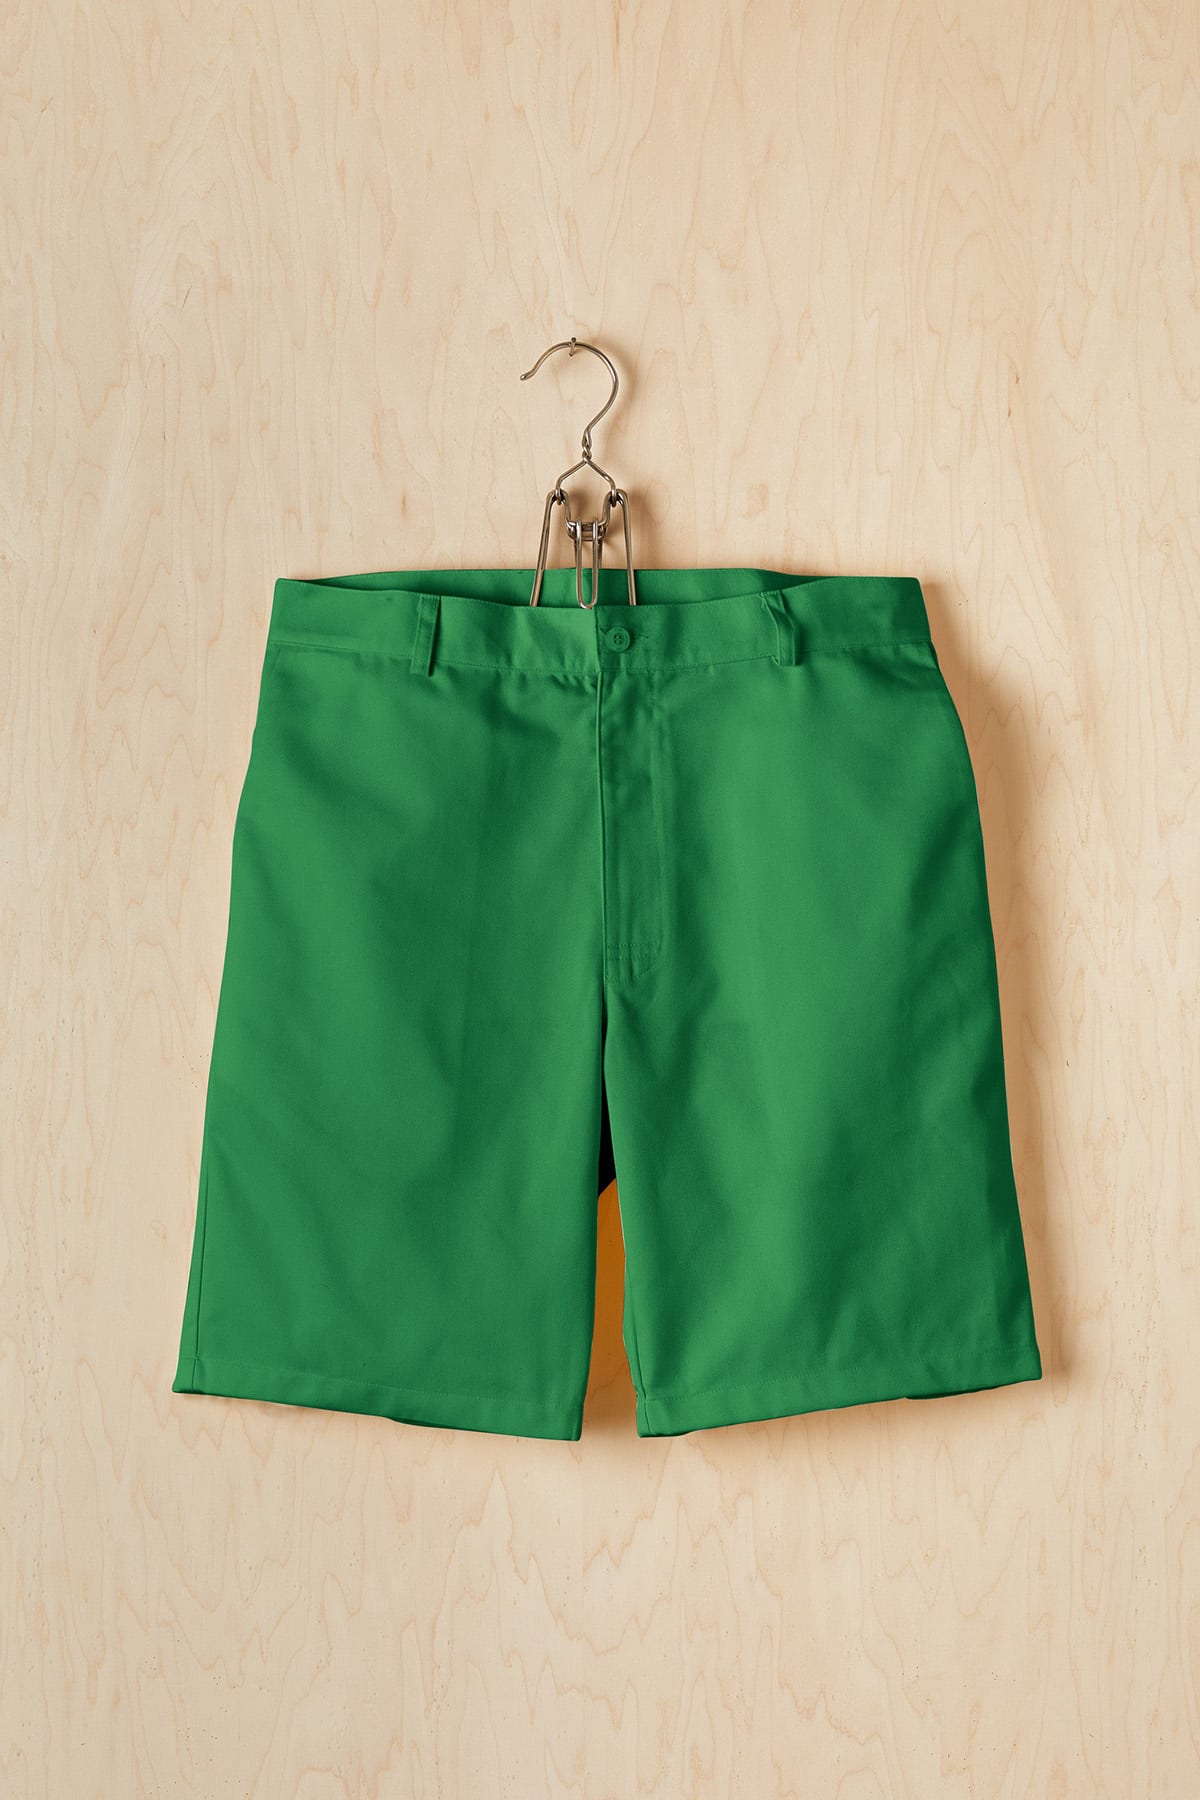 Rosa rugosa dunn shorts in kelly green